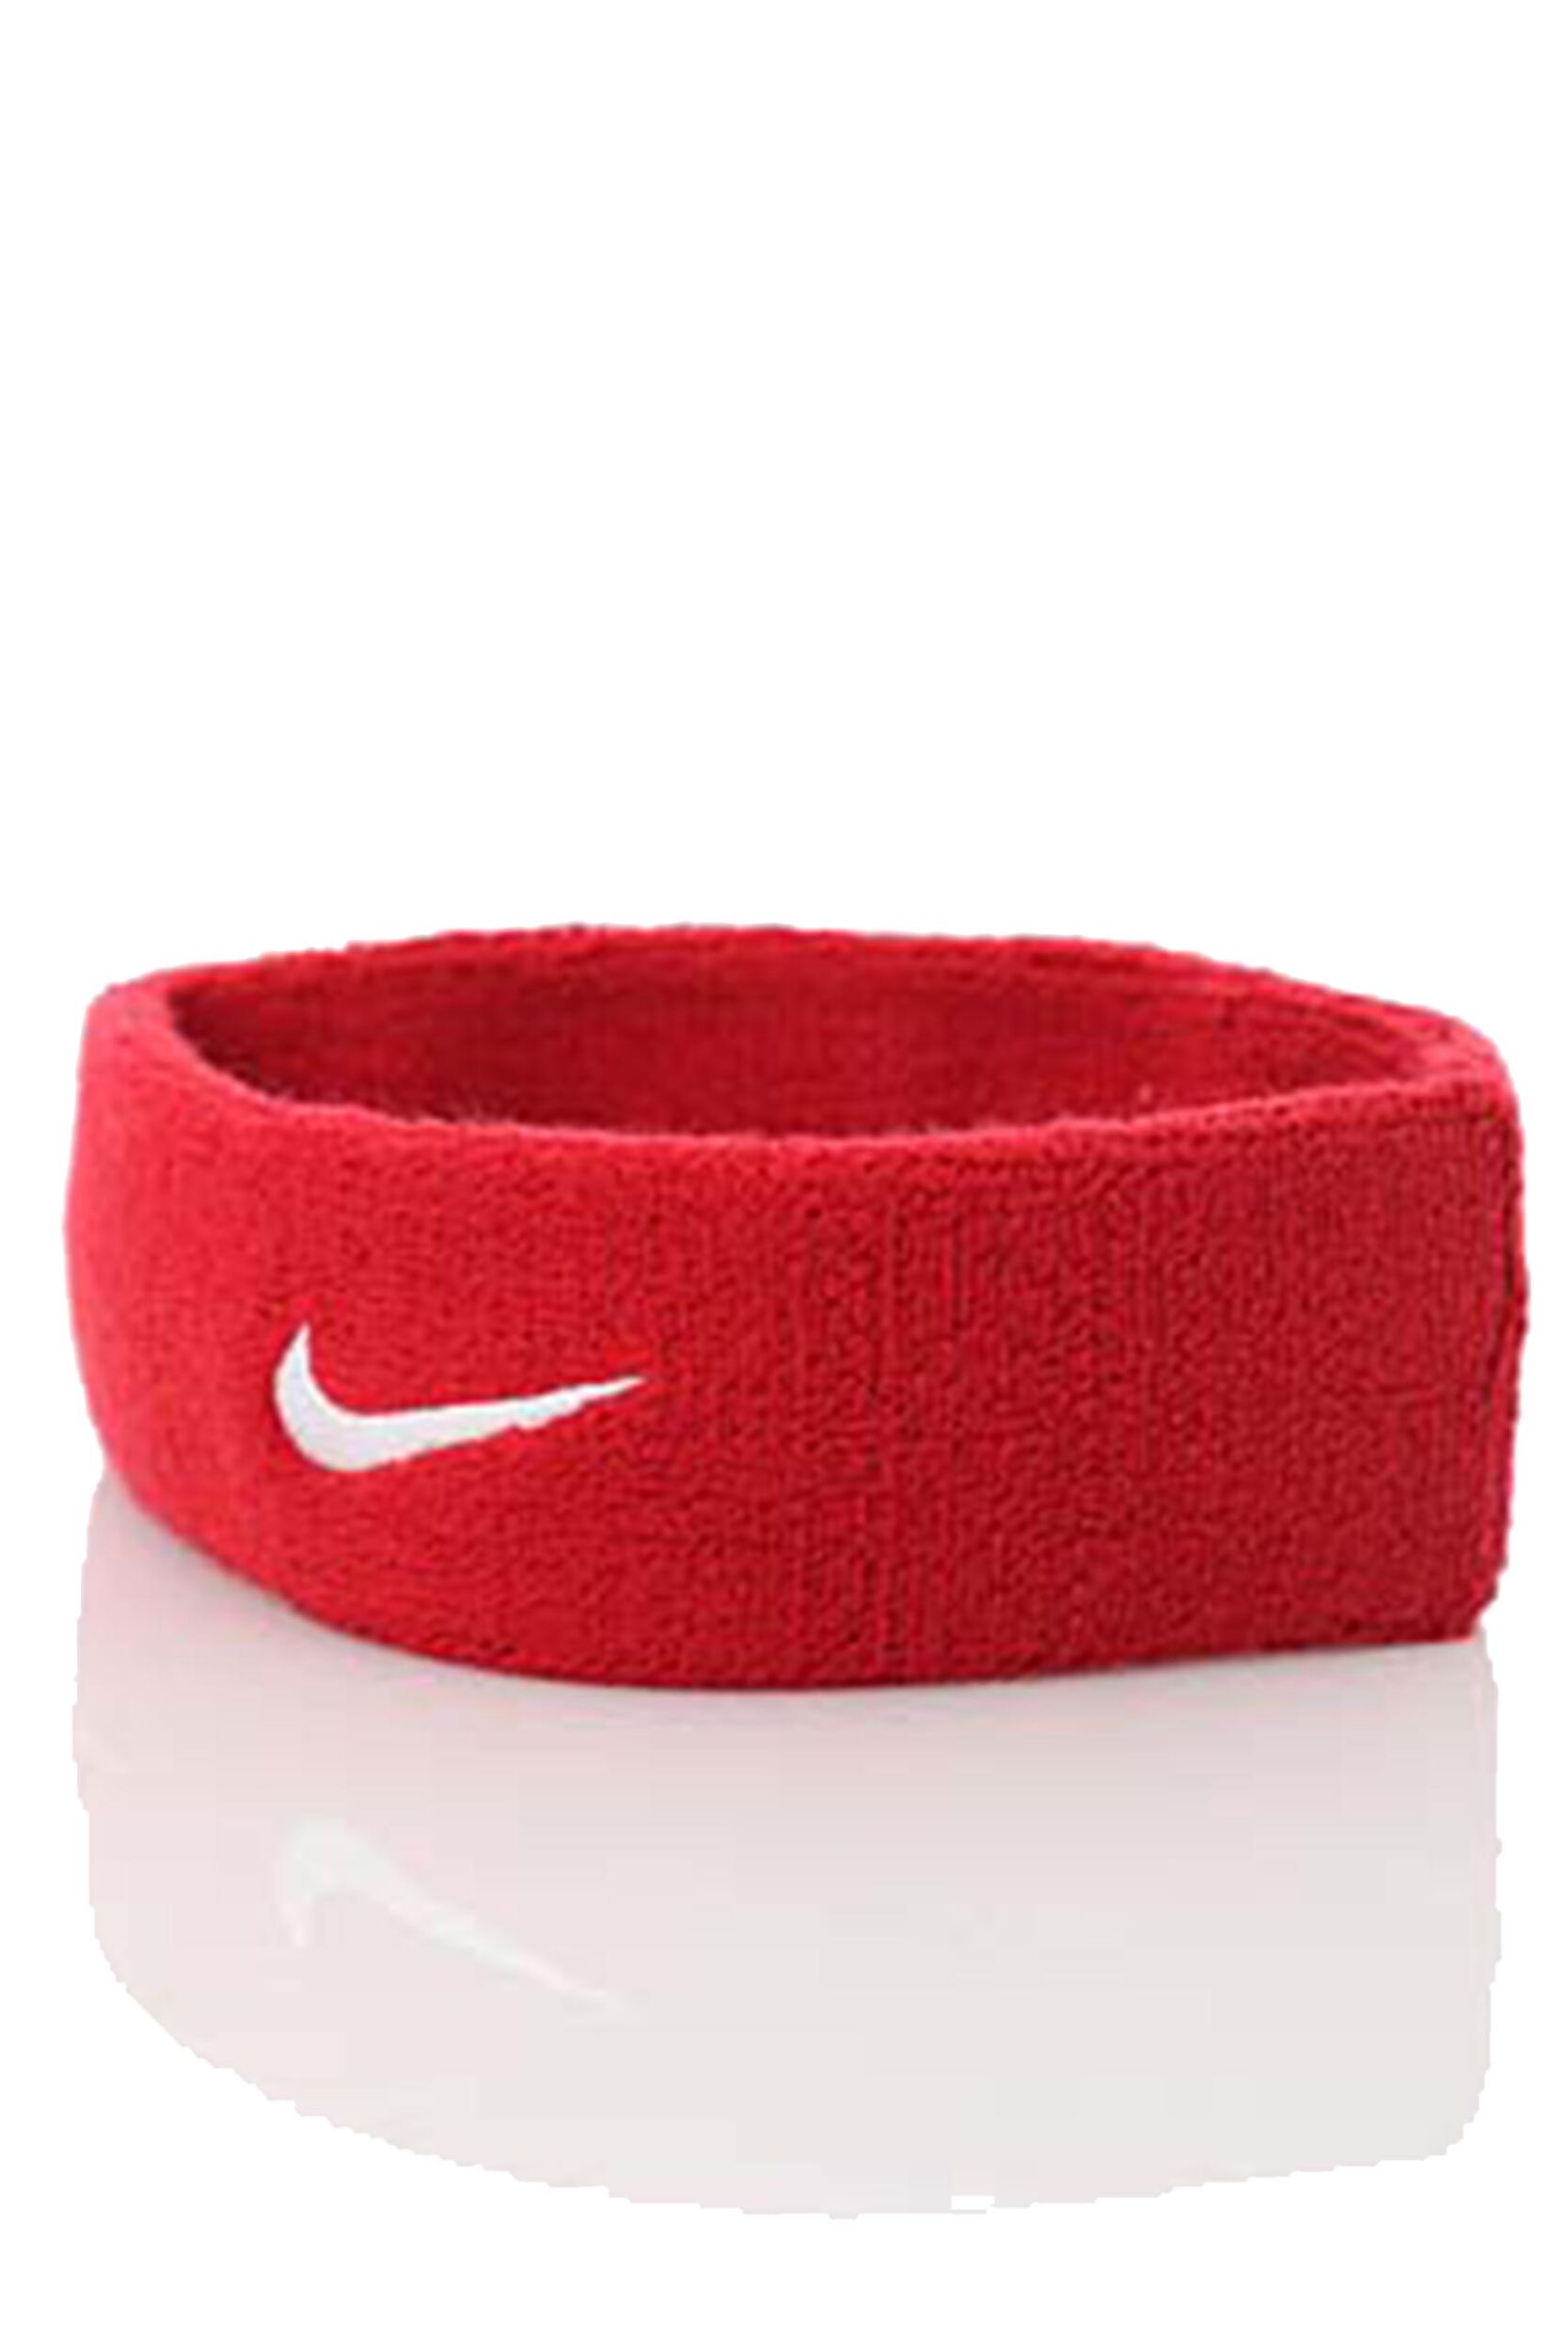 Mens & Ladies 1 Pack Nike Swoosh Headband